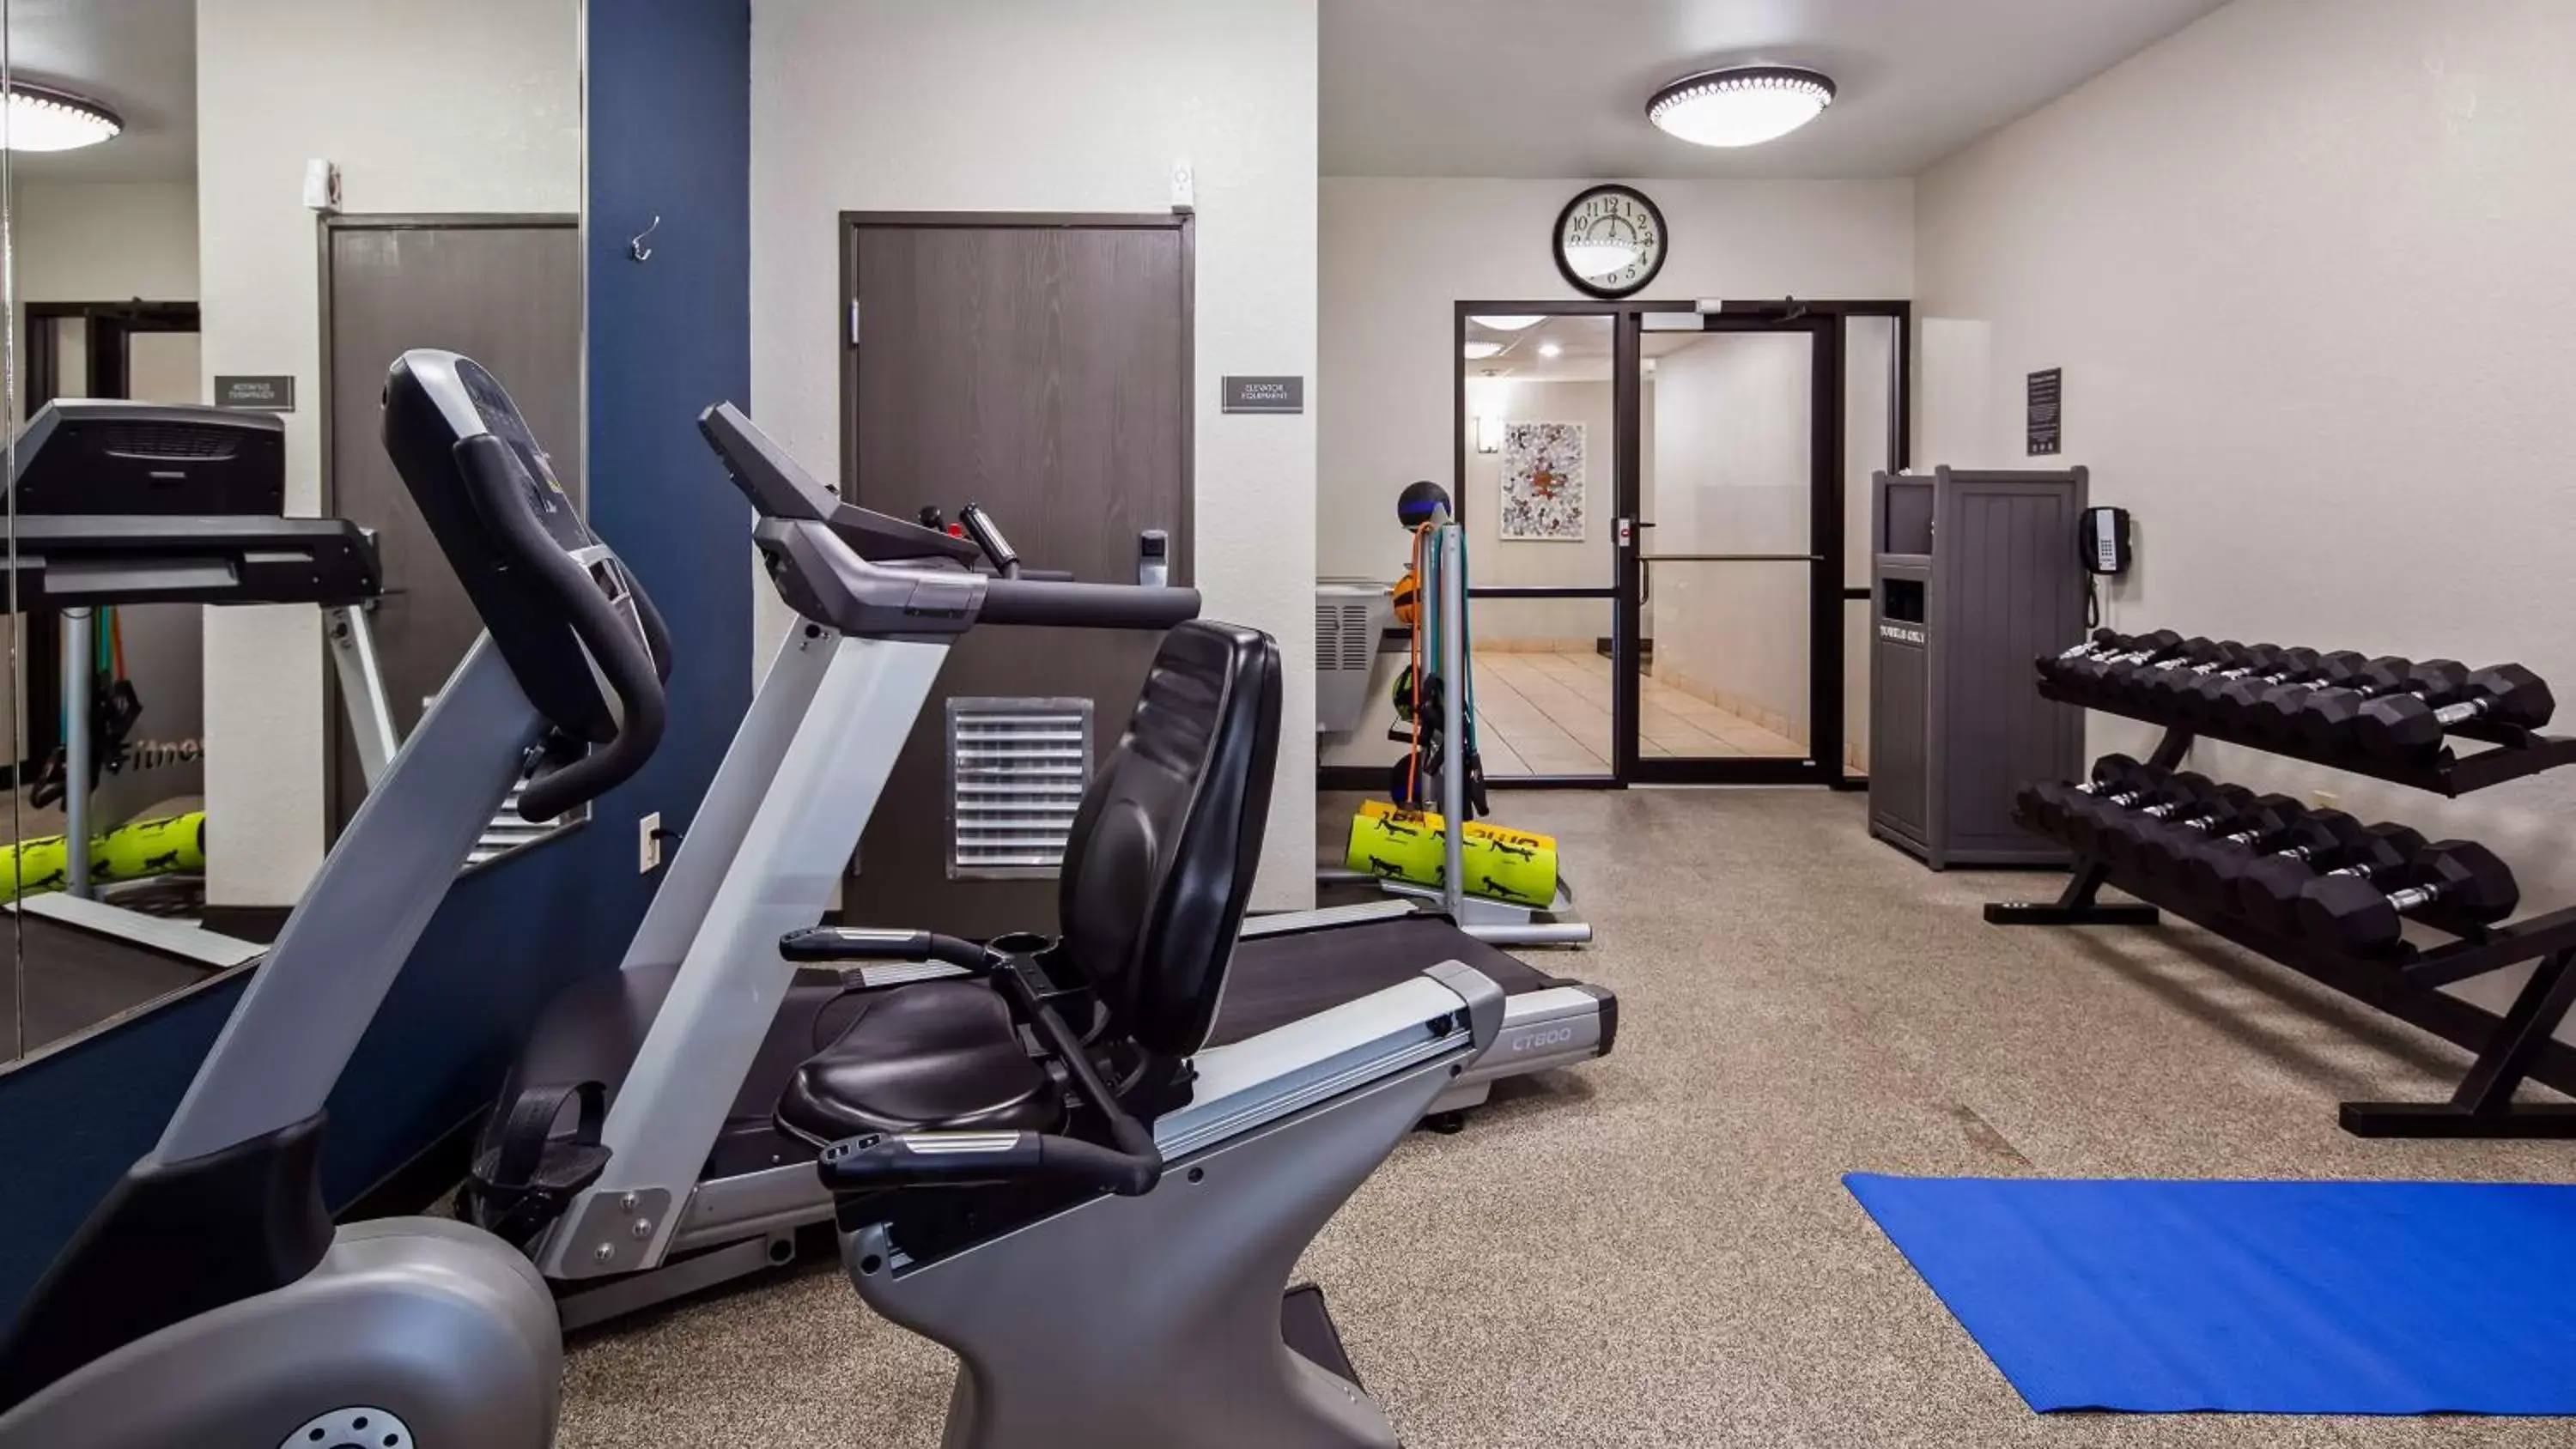 Fitness centre/facilities, Fitness Center/Facilities in Best Western Northwest Corpus Christi Inn & Suites